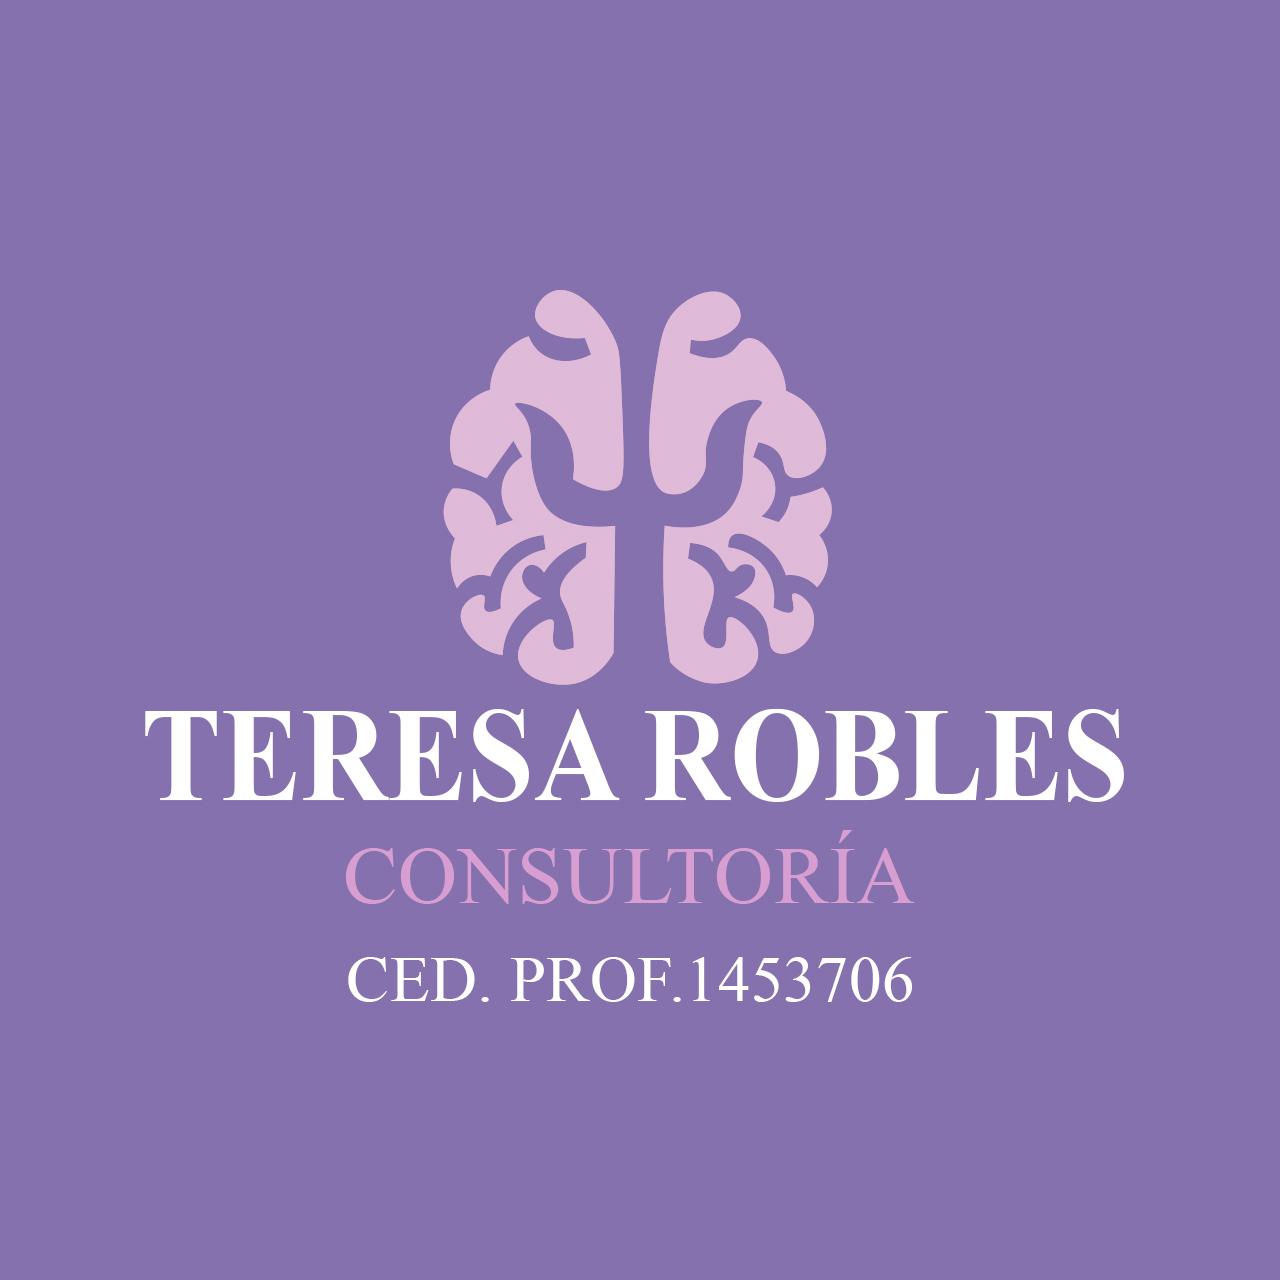 Teresa Robles Consultoría